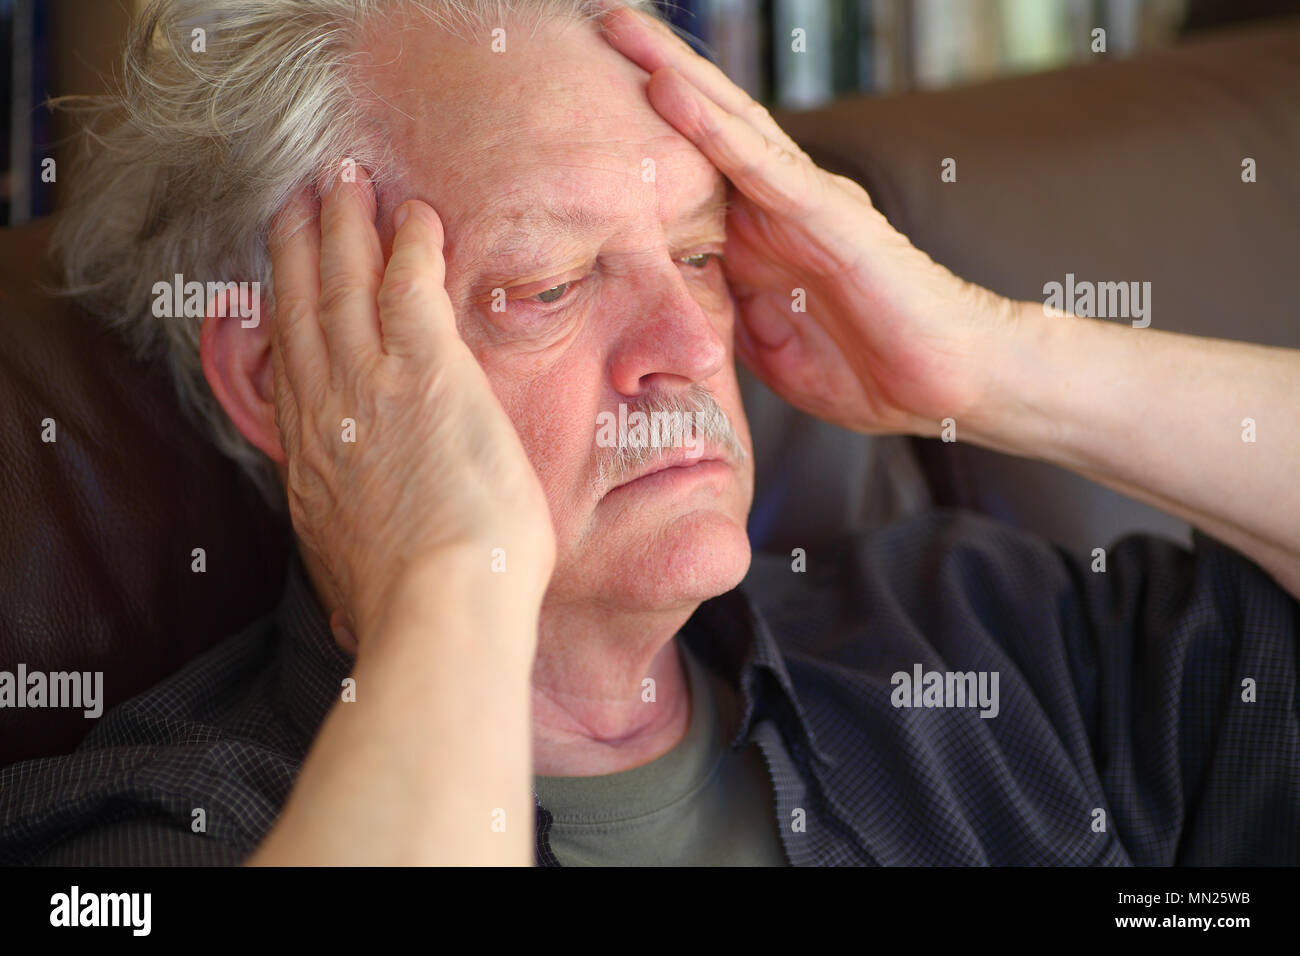 Senior man seated with a bad headache Stock Photo